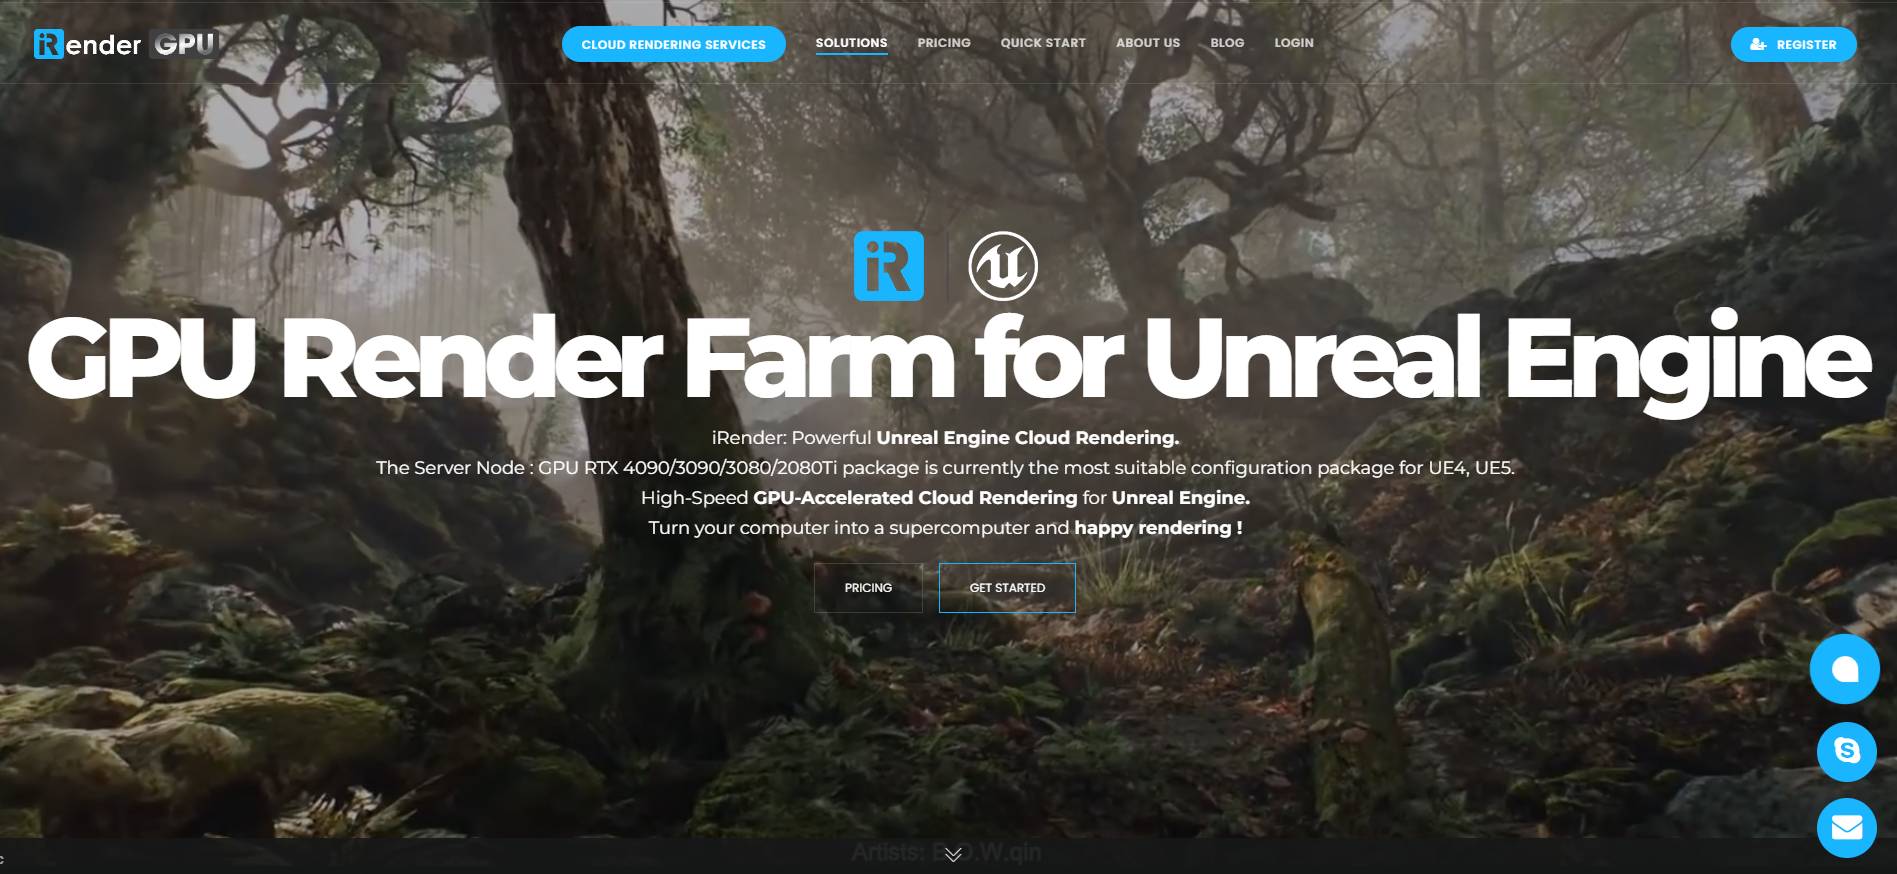 GPU Render Farm tốt nhất cho Unreal Engine - iRender